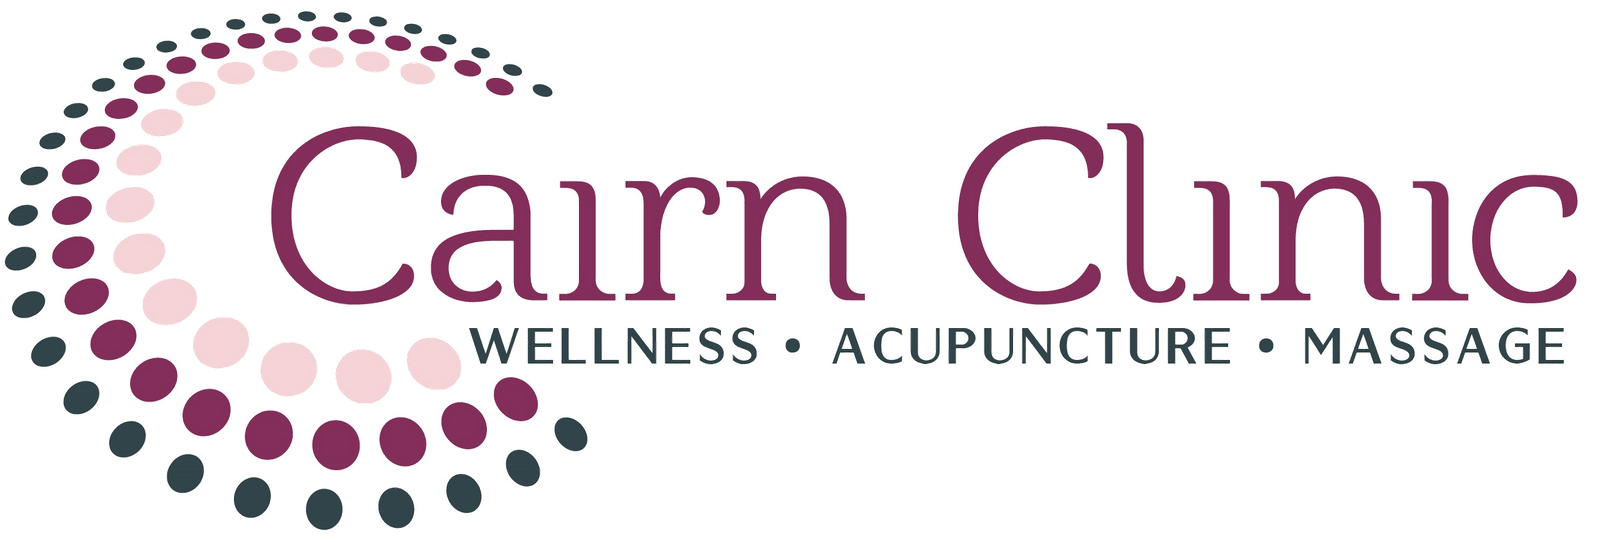 Cairn Clinic - Acupuncture, Medical Massage, Wellness, Oriental Medicine